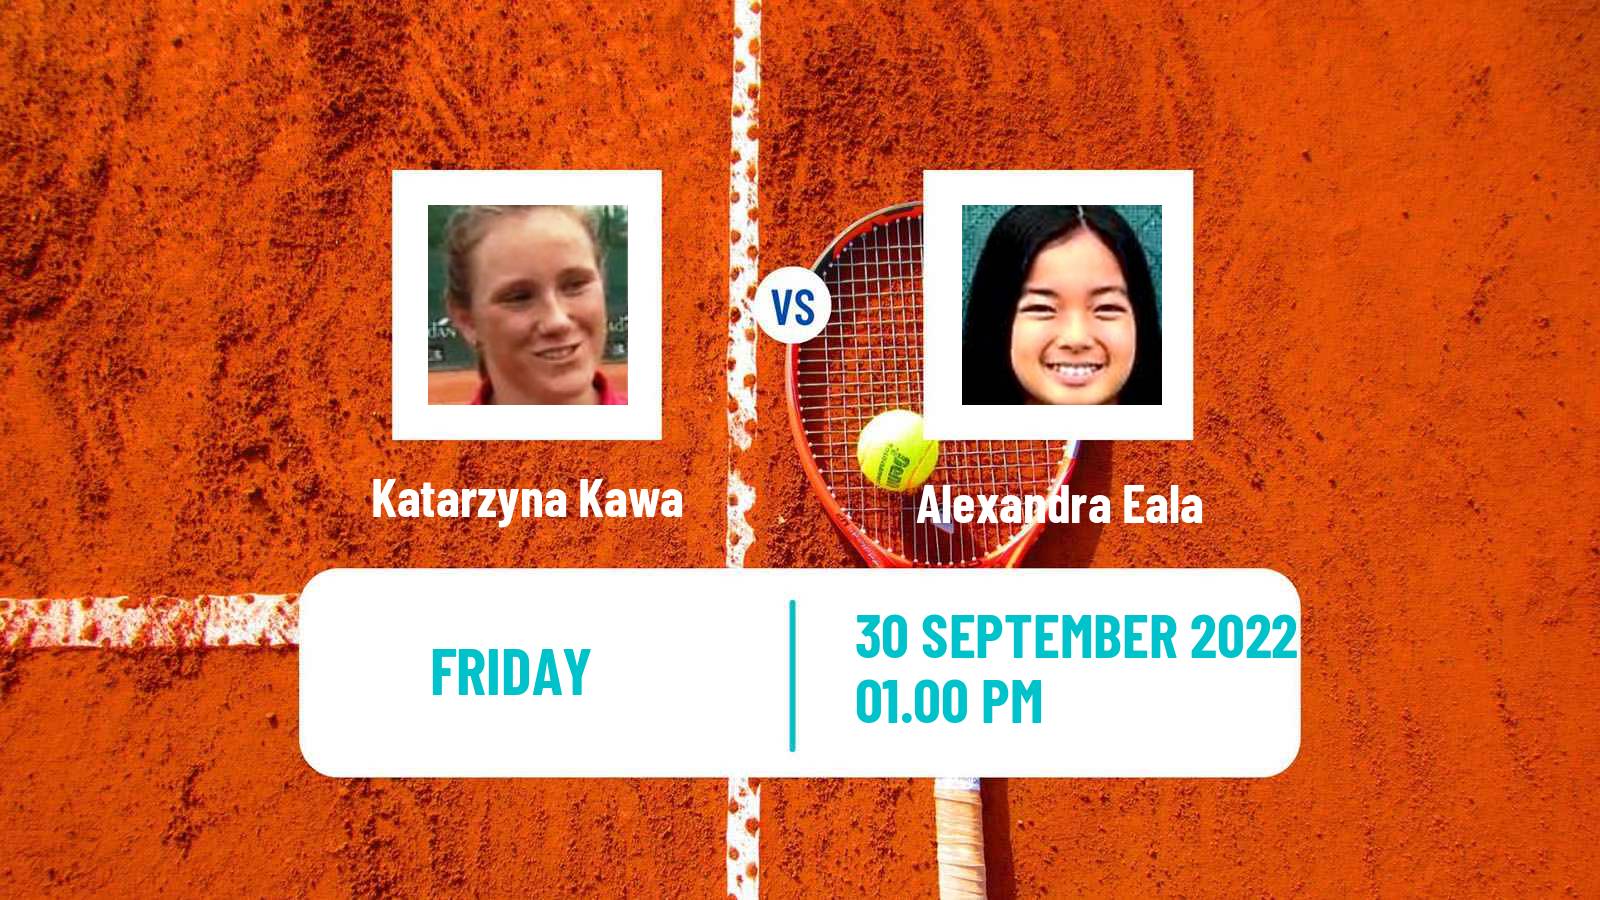 Tennis ITF Tournaments Katarzyna Kawa - Alexandra Eala